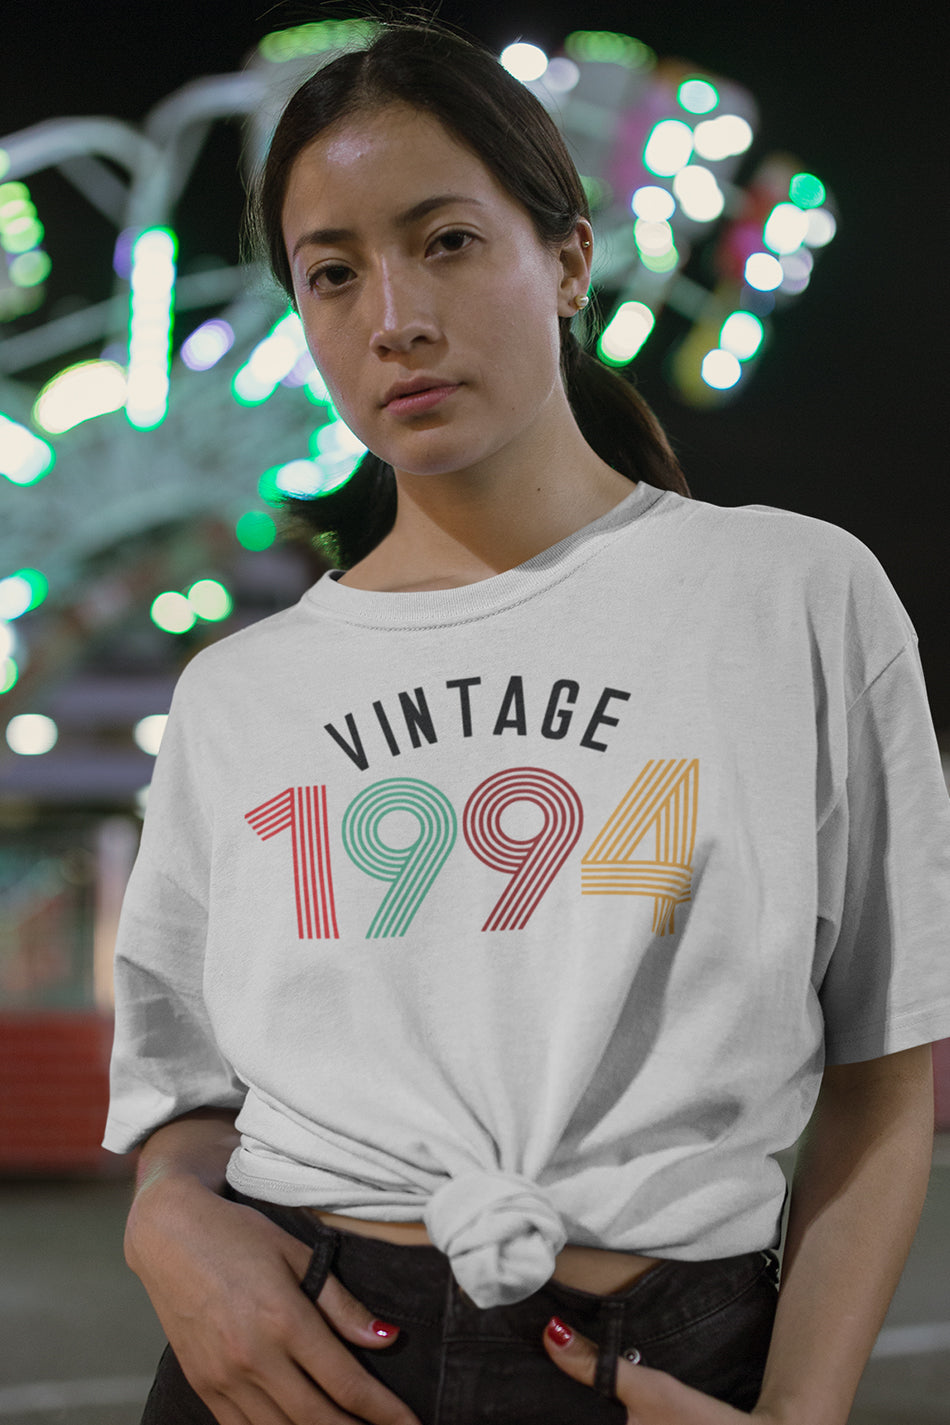 Vintage 1994 30th Birthday T Shirt